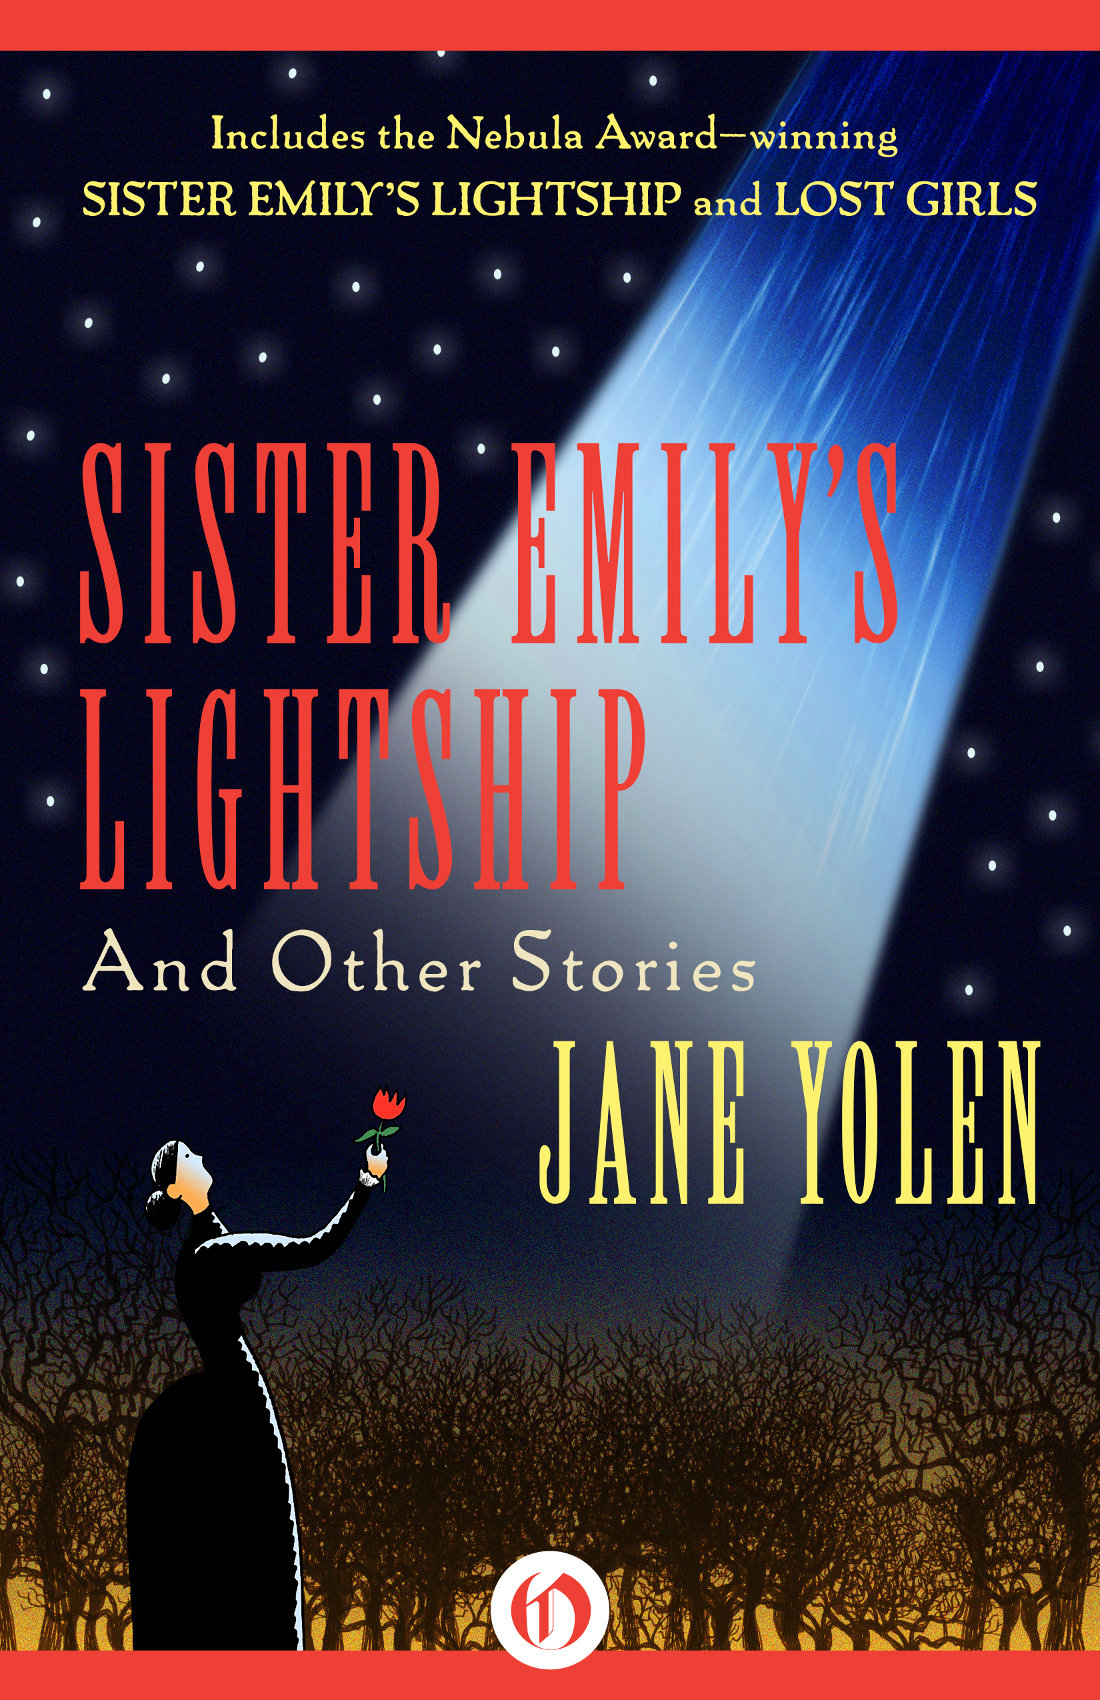 Sister Emily's Lightship by Jane Yolen